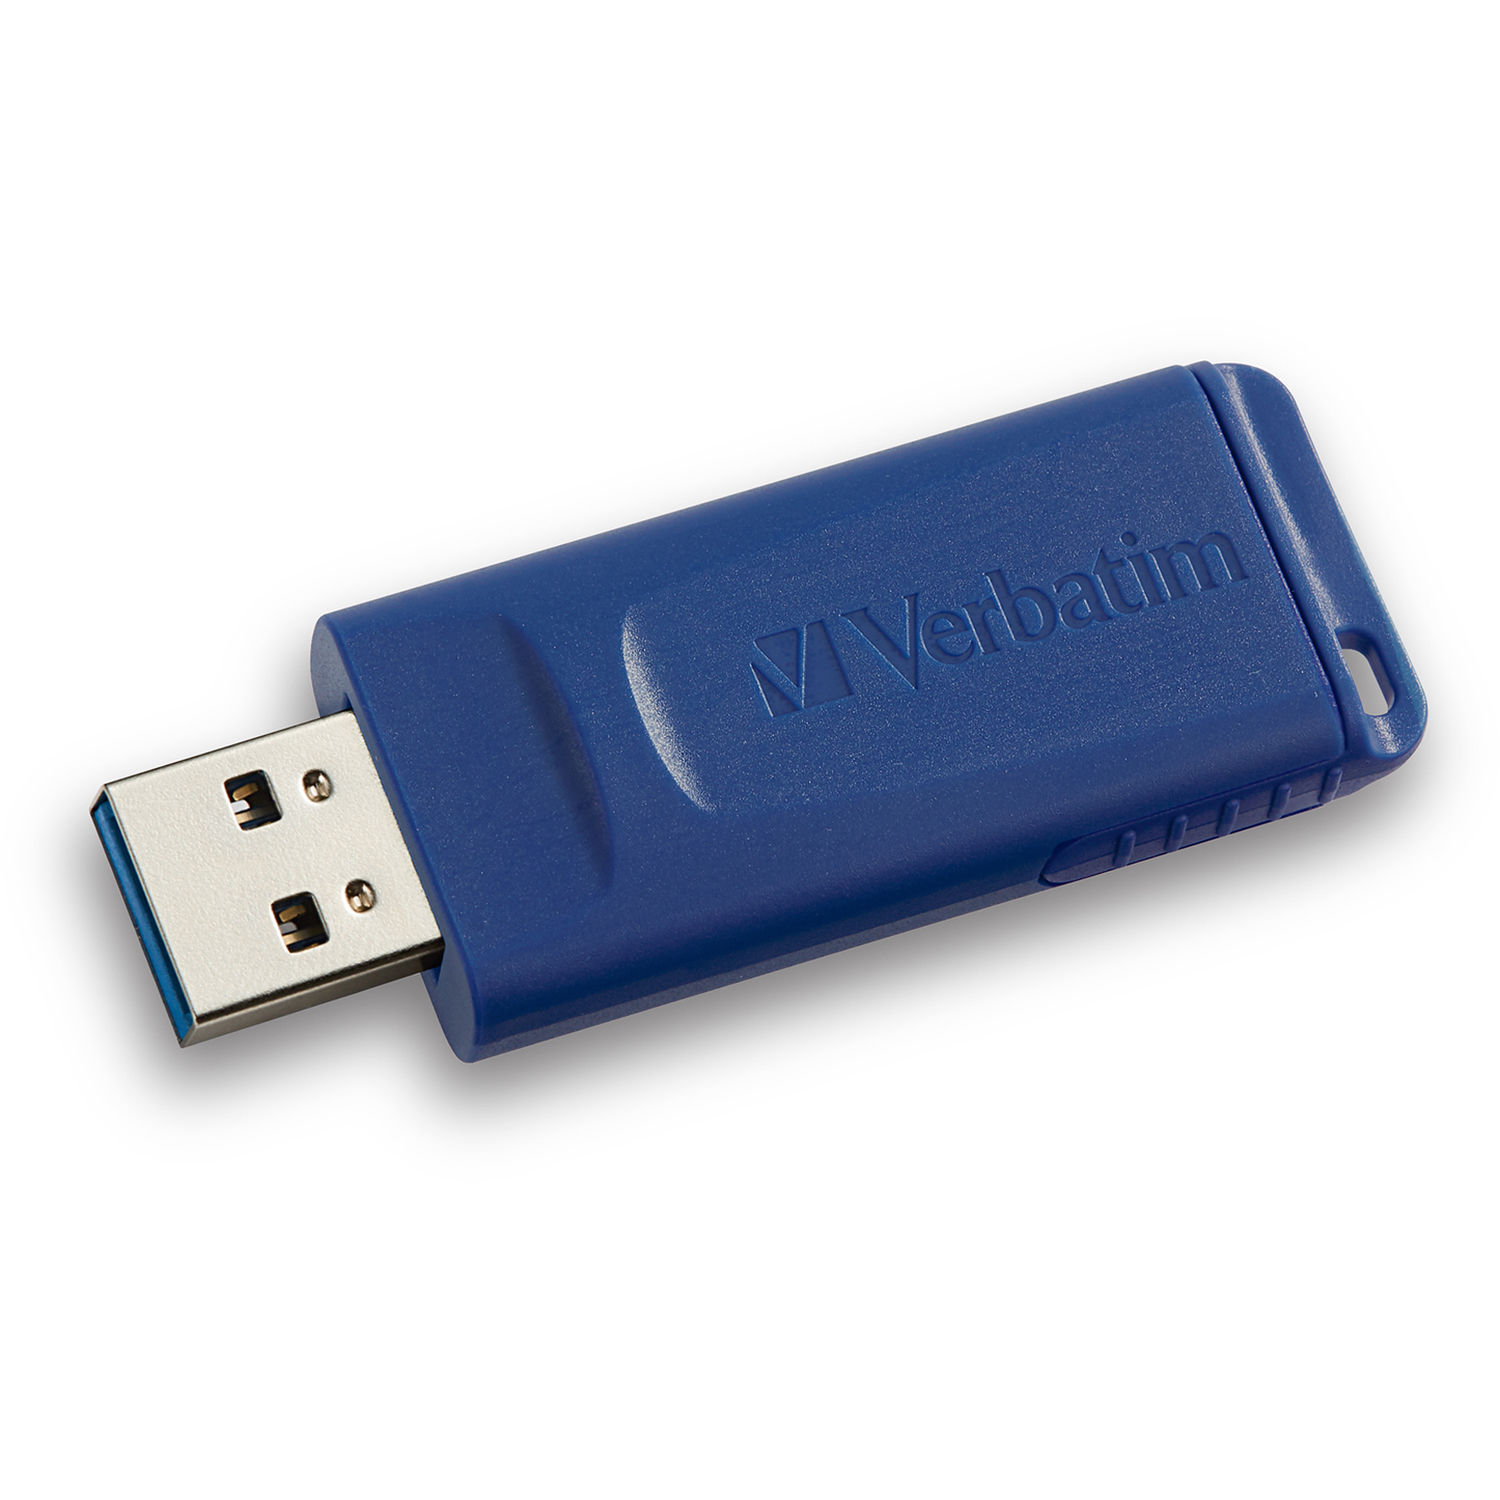 8GB Quality Product Slippers USB Flash Drives weirdland Flip Flops USB Stick 